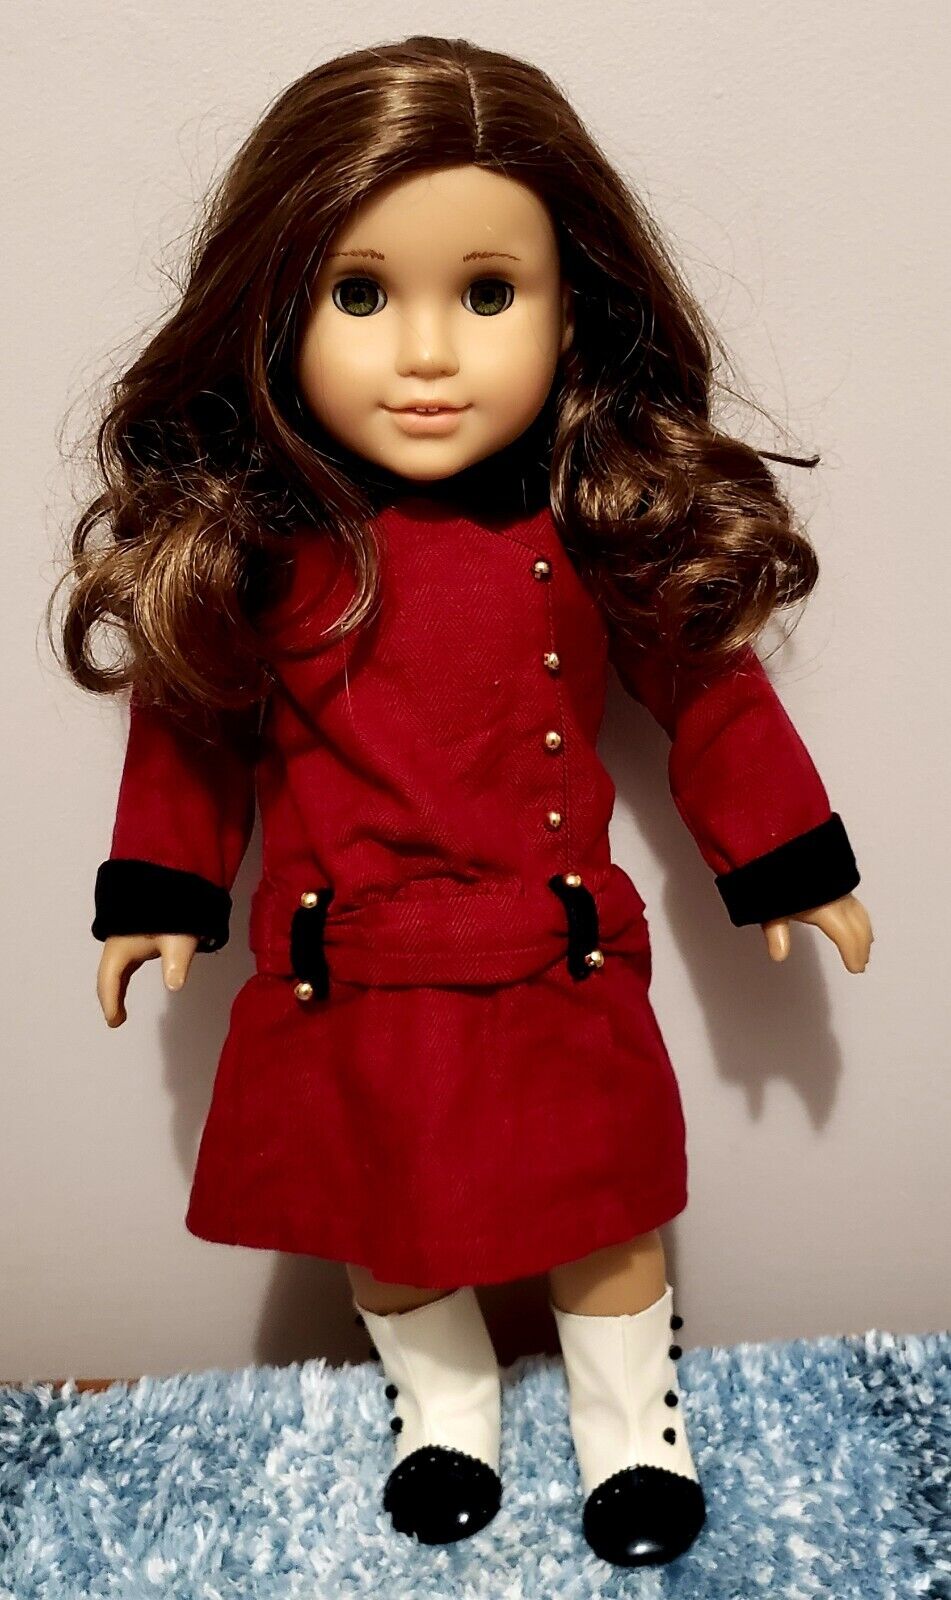 Vintage Retired American Girl Doll Rebecca Rubin 2009.